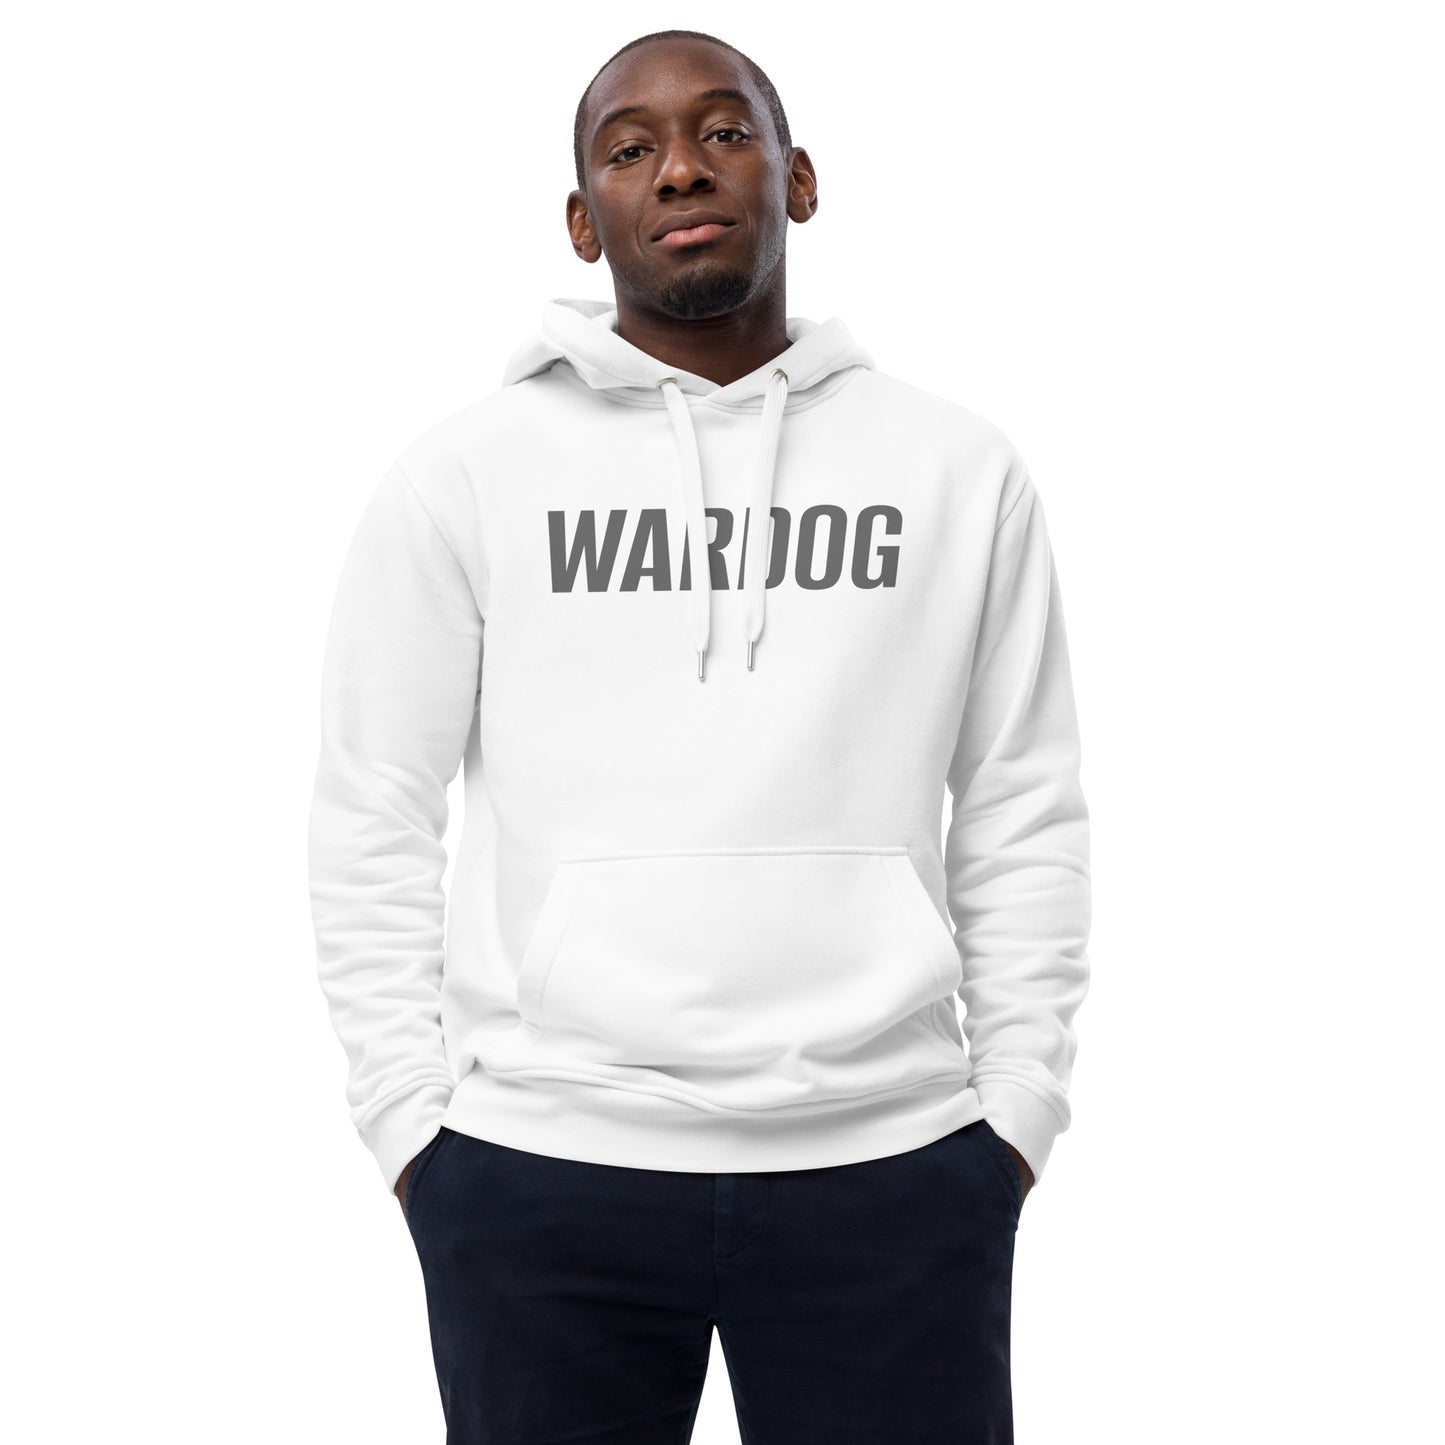 Premium eco wardog hoodie